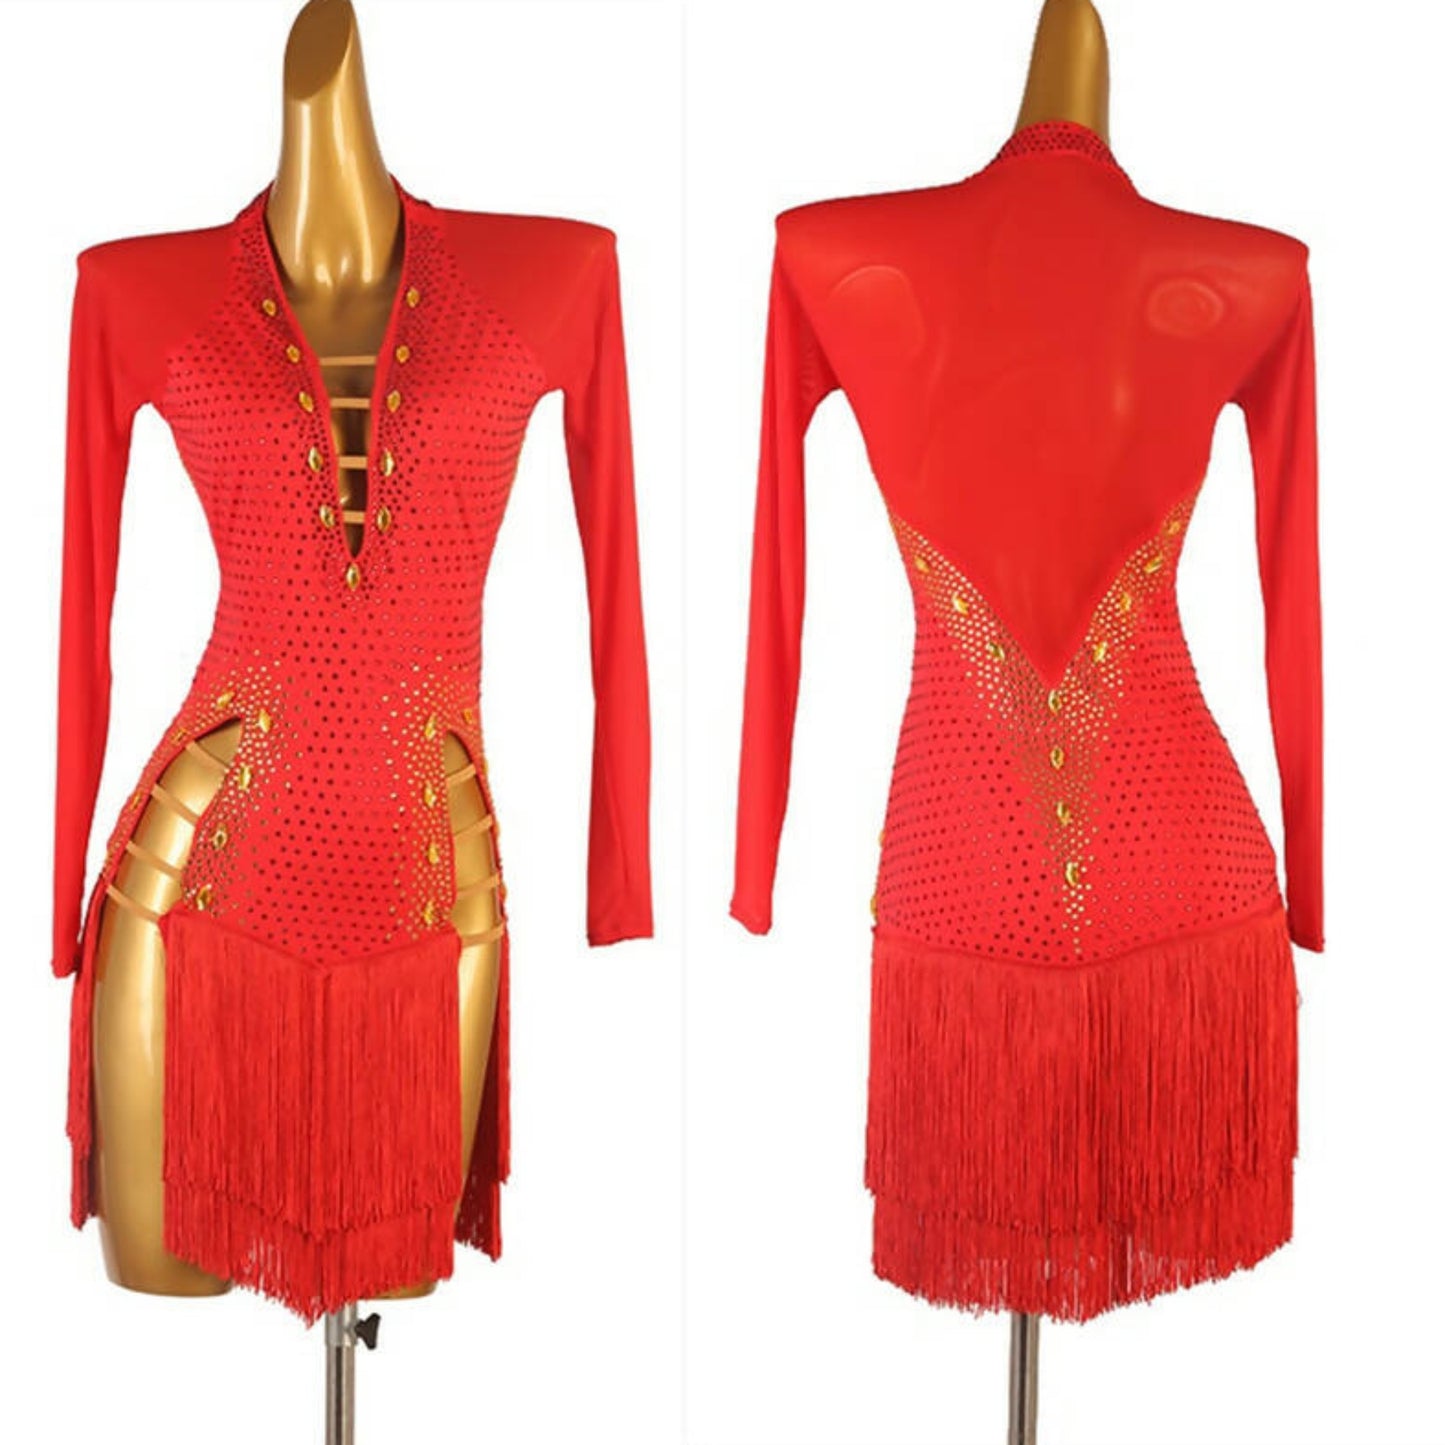 Red Latin dress